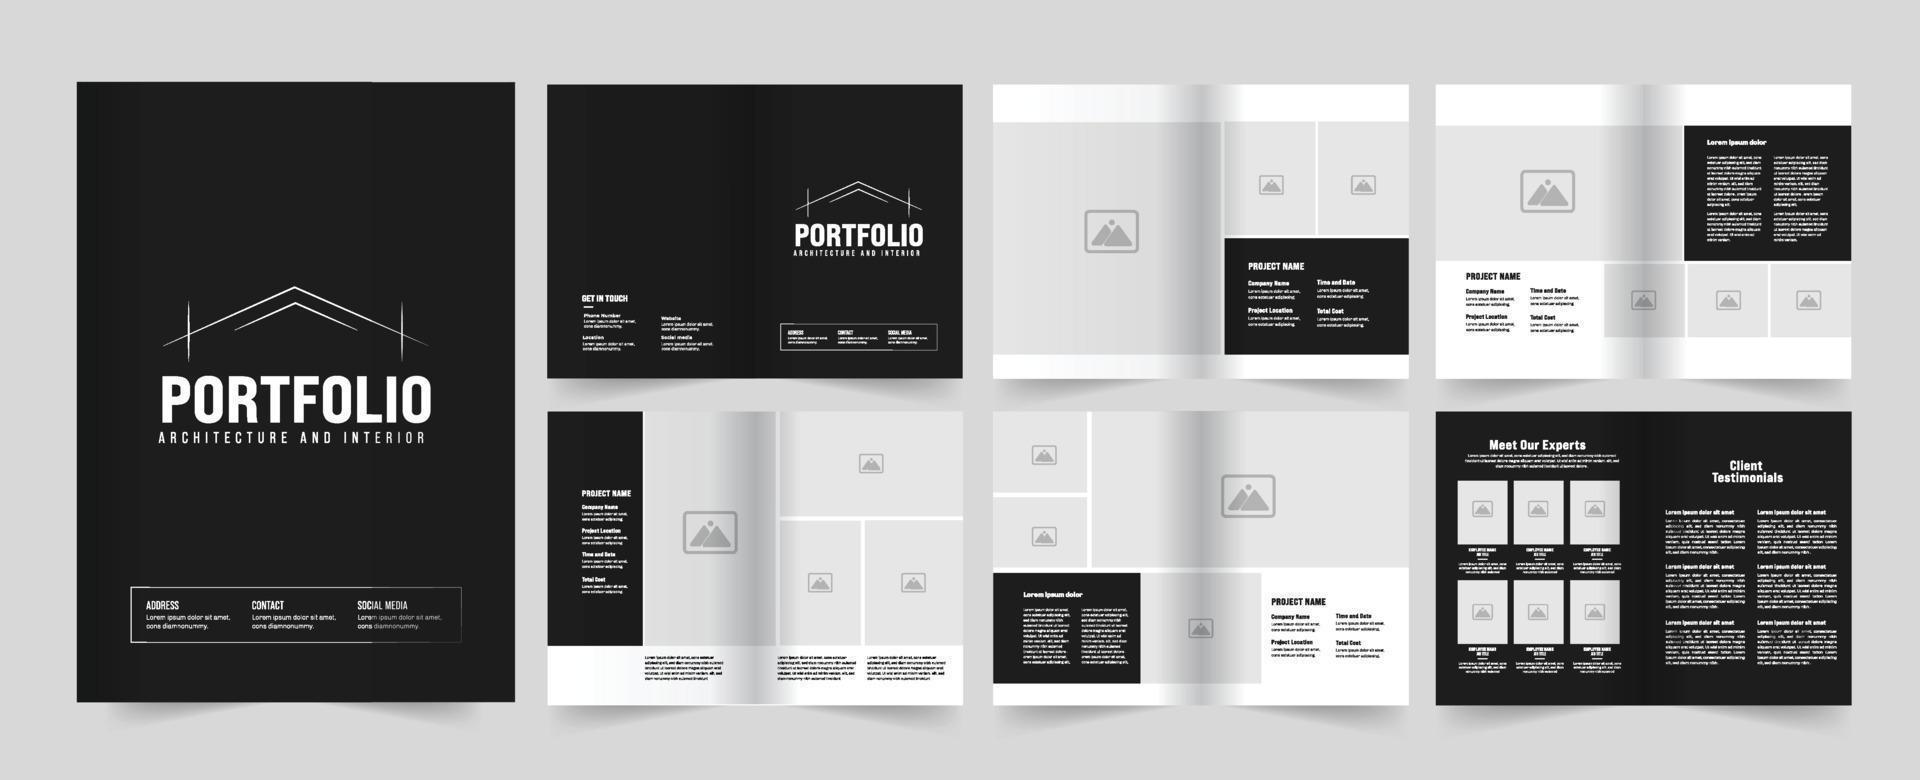 Architecture Portfolio Layout Template Design vector